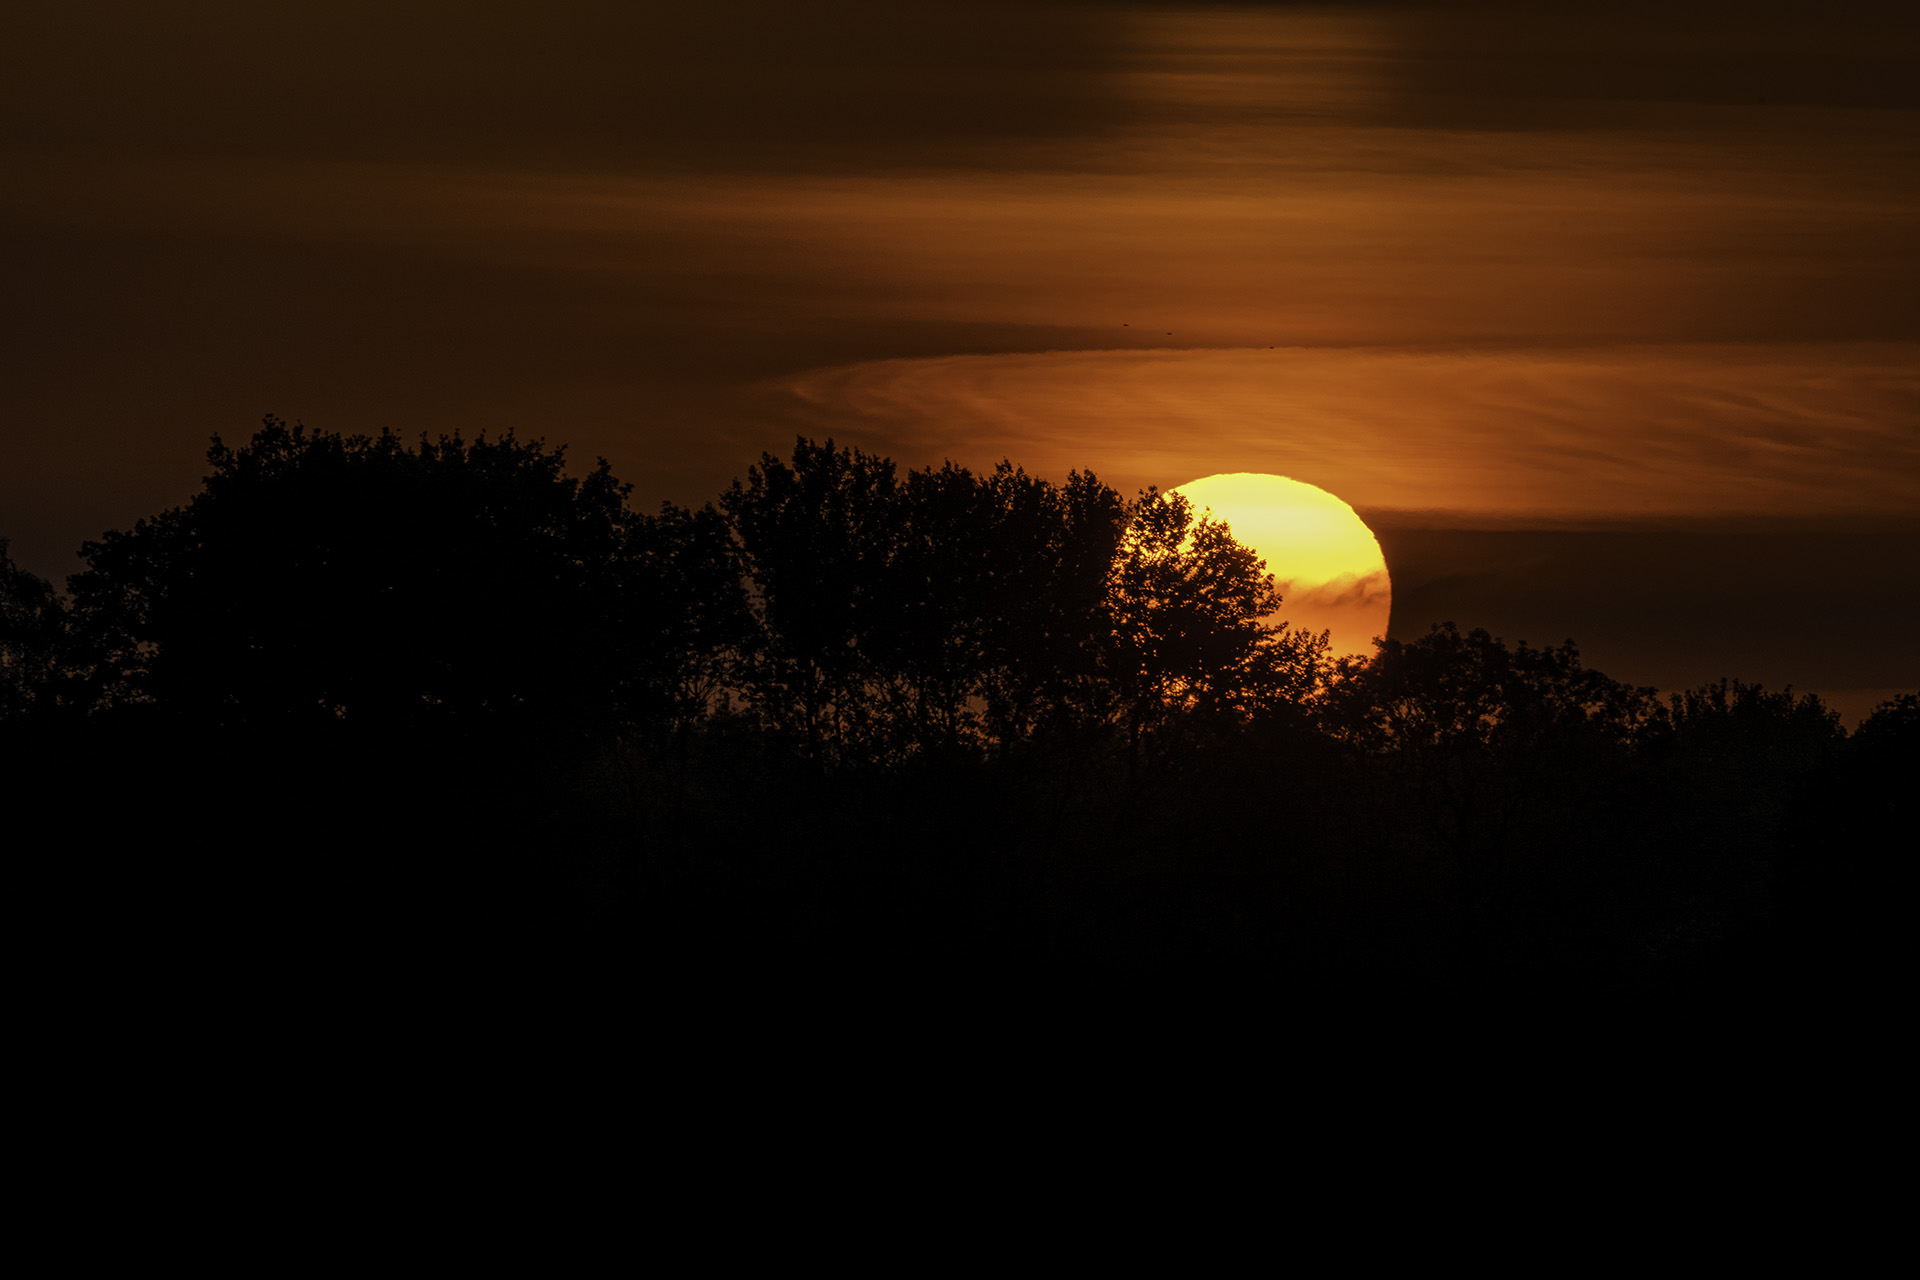 Tieforangener Sonnenuntergang, Copyright Stephan Siemon © belichtet.net, Stephan Siemon